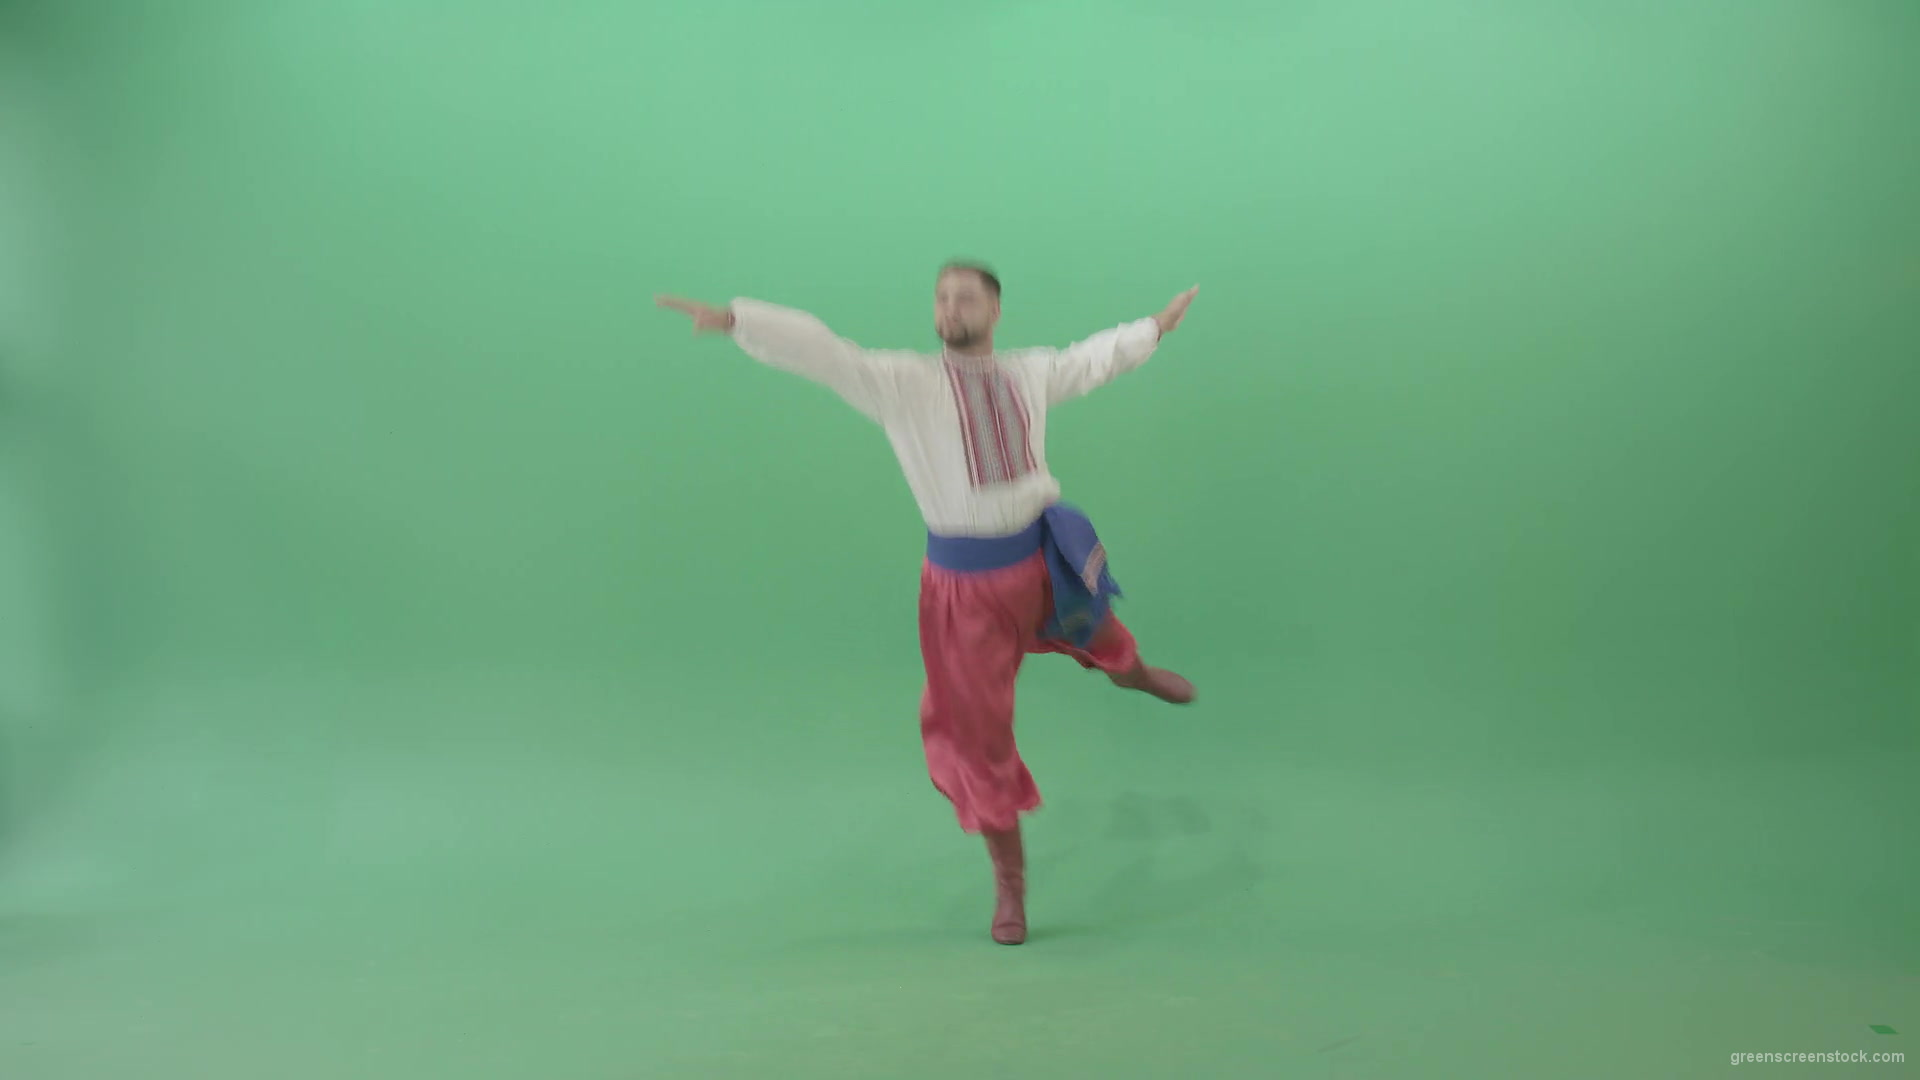 Folk-national-social-dancing-cossack-dance-Hopak-isolated-on-green-screen-1920_005 Green Screen Stock